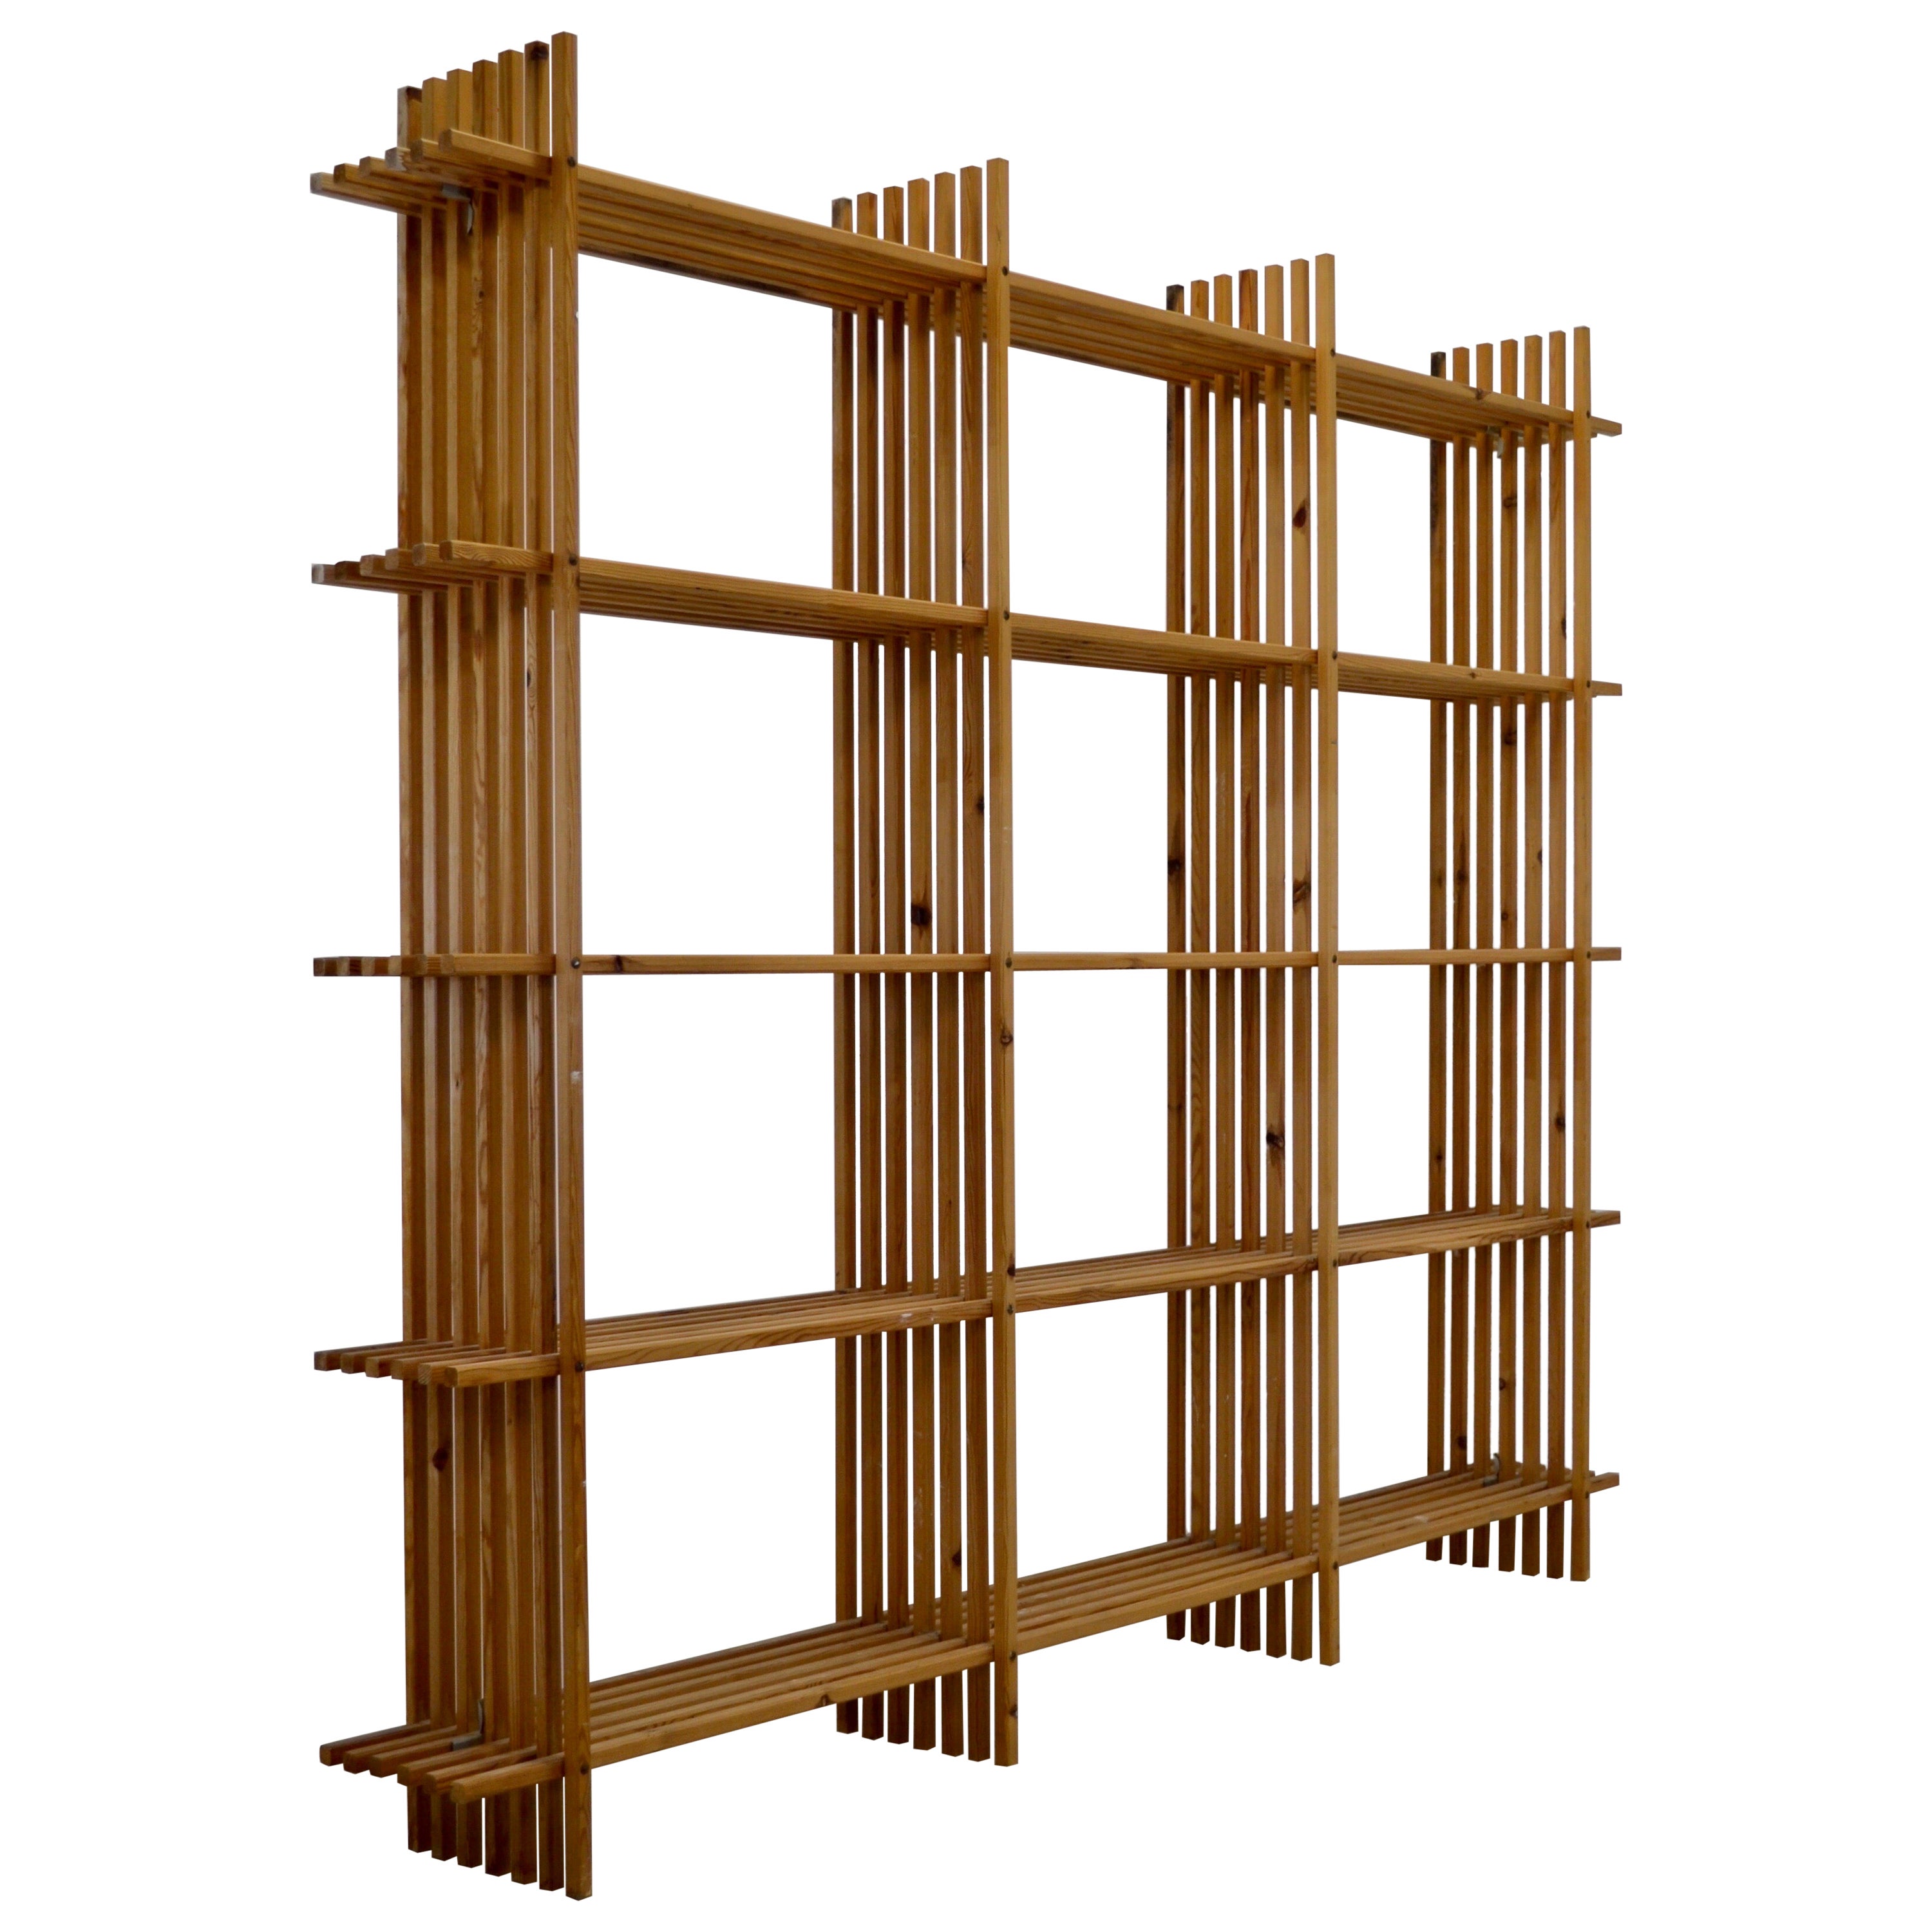 A larch wood geometric bookcase - France 1960.